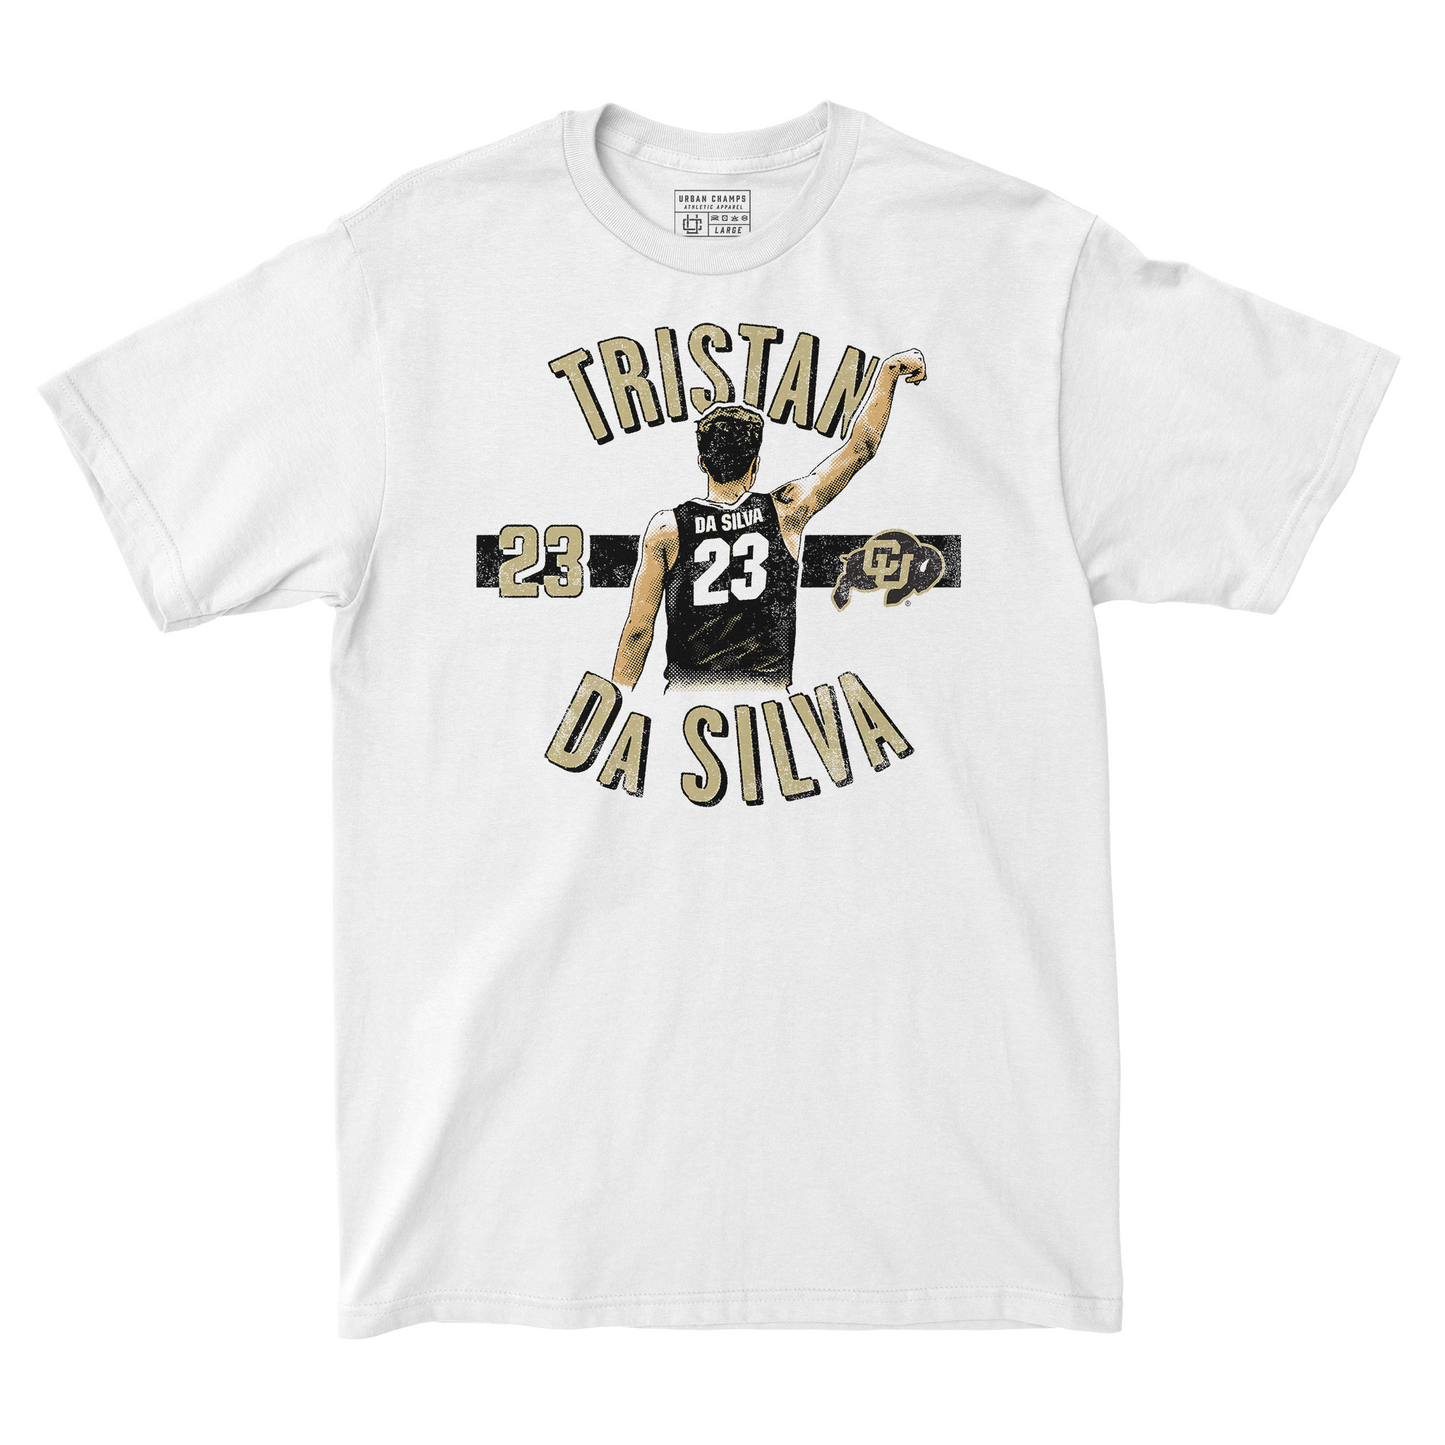 EXCLUSIVE RELEASE: Tristan da Silva Follow Through T-Shirt